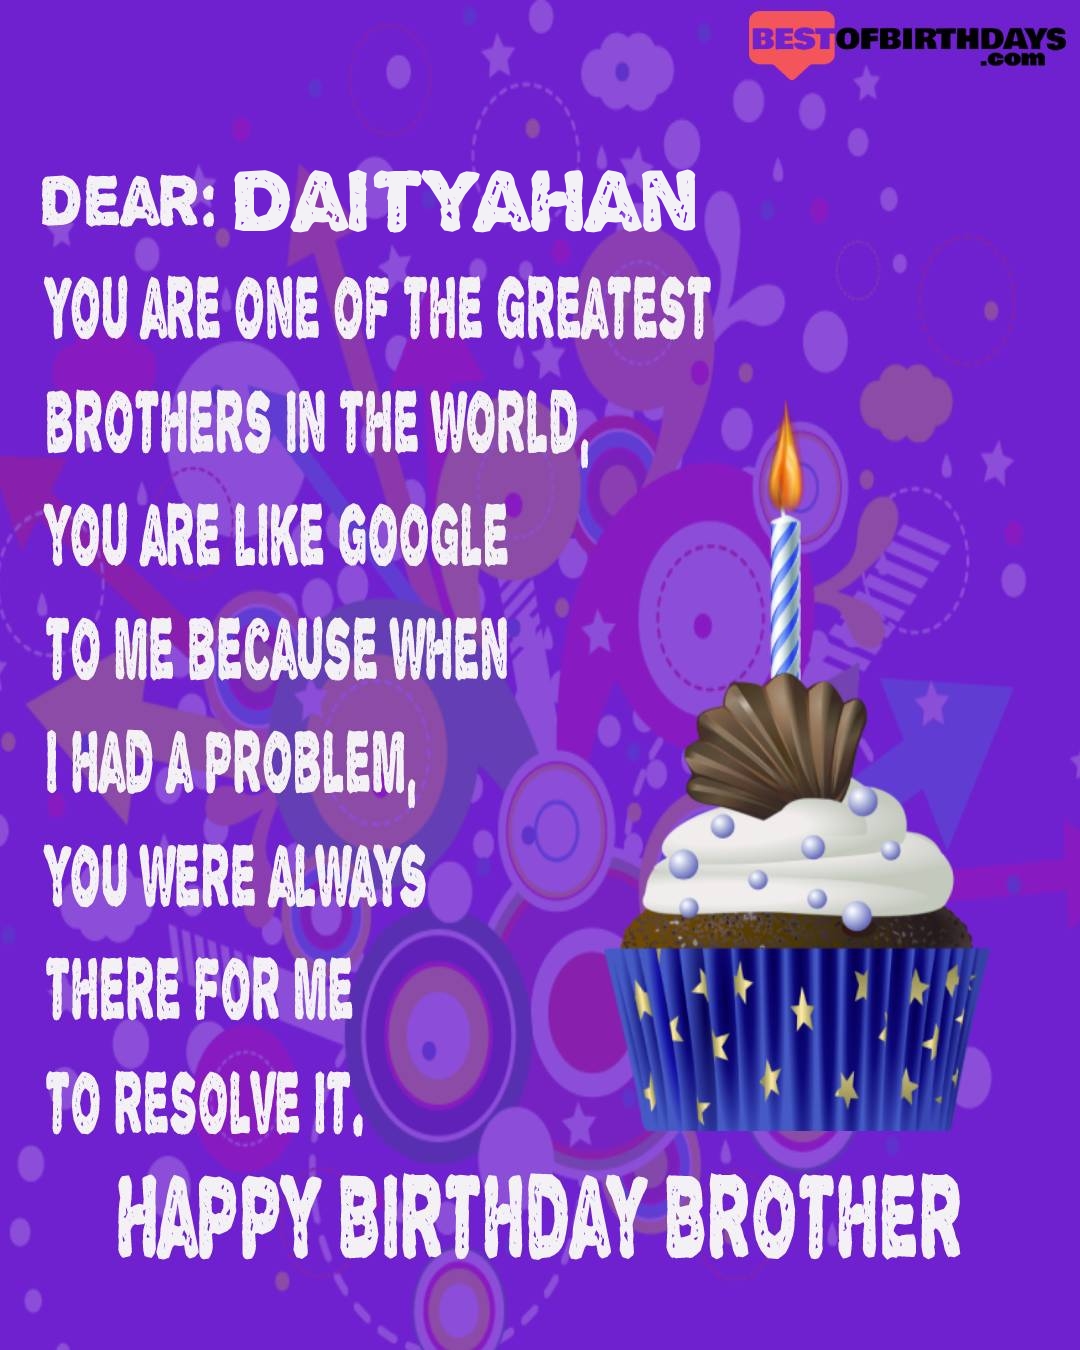 Happy birthday daityahan bhai brother bro